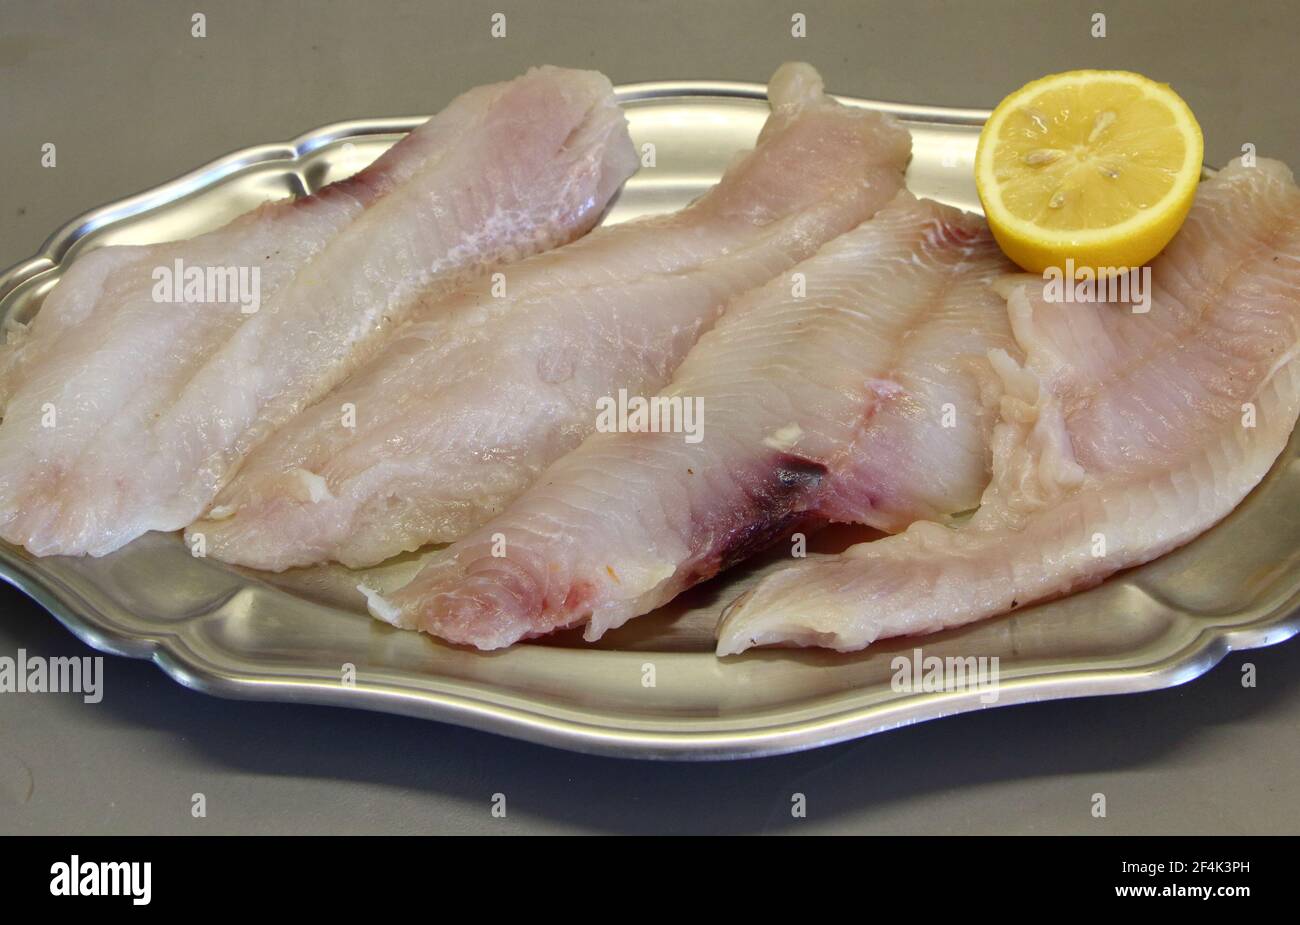 Raw fish filet and half lemon on a pewter dish Stock Photo